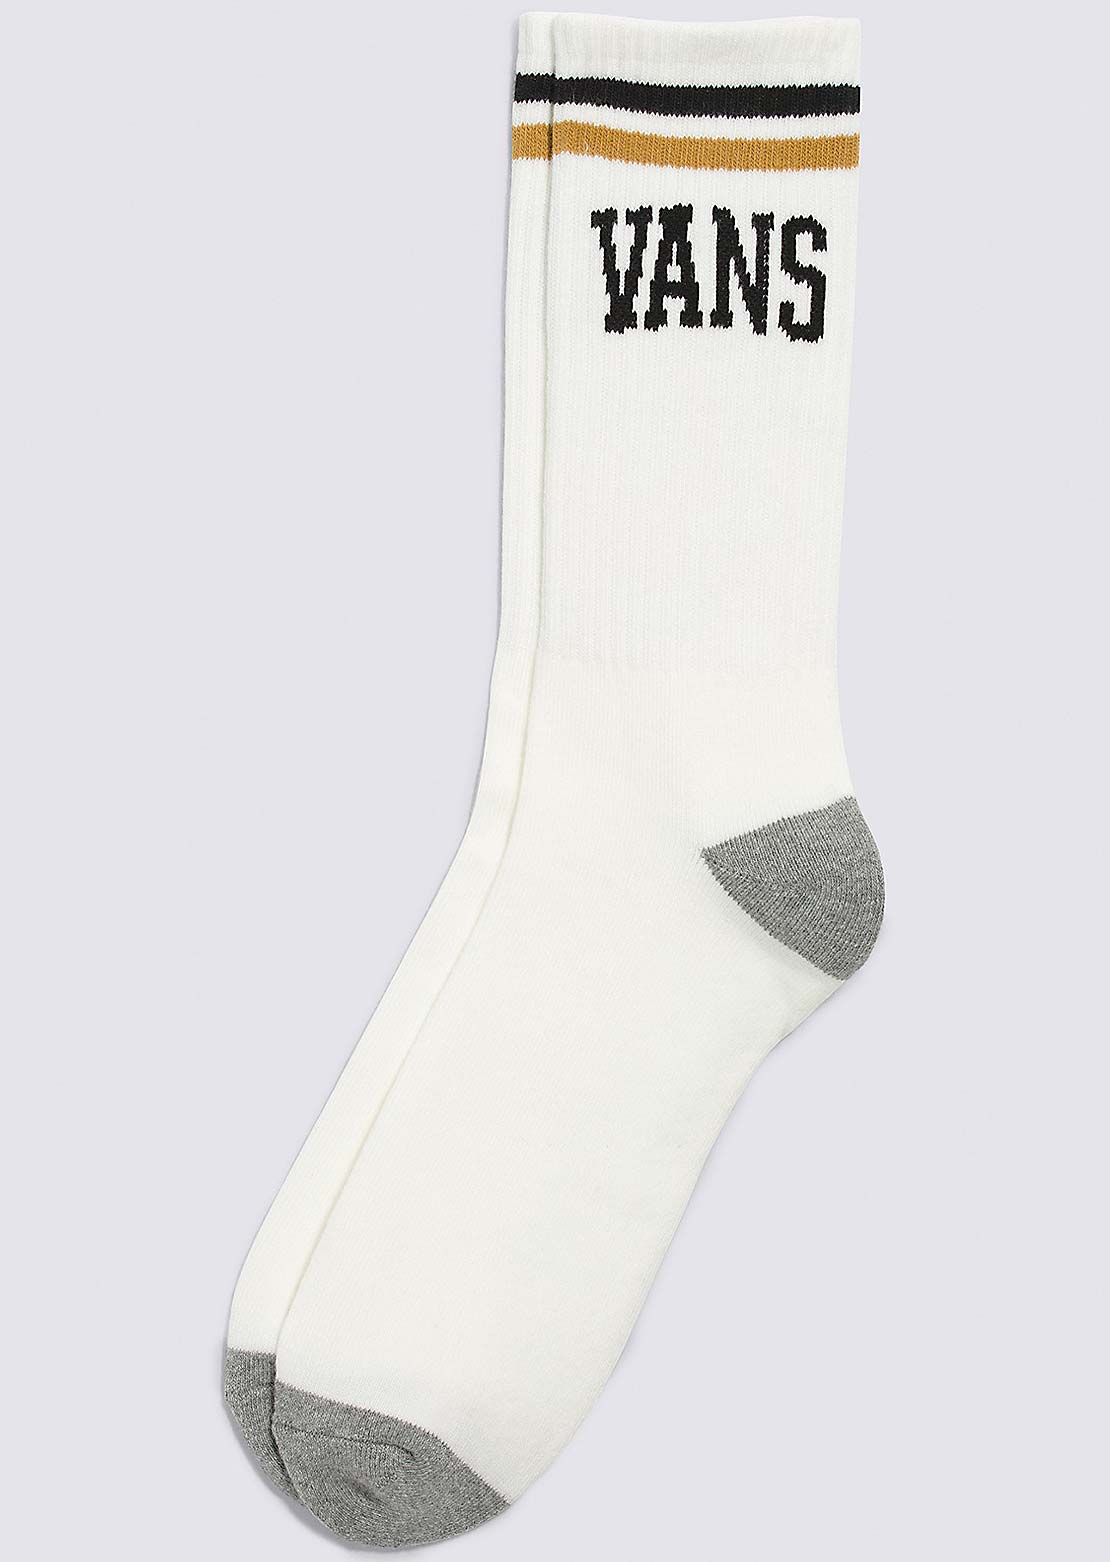 Vans Men's Prep Crew Socks - PRFO Sports